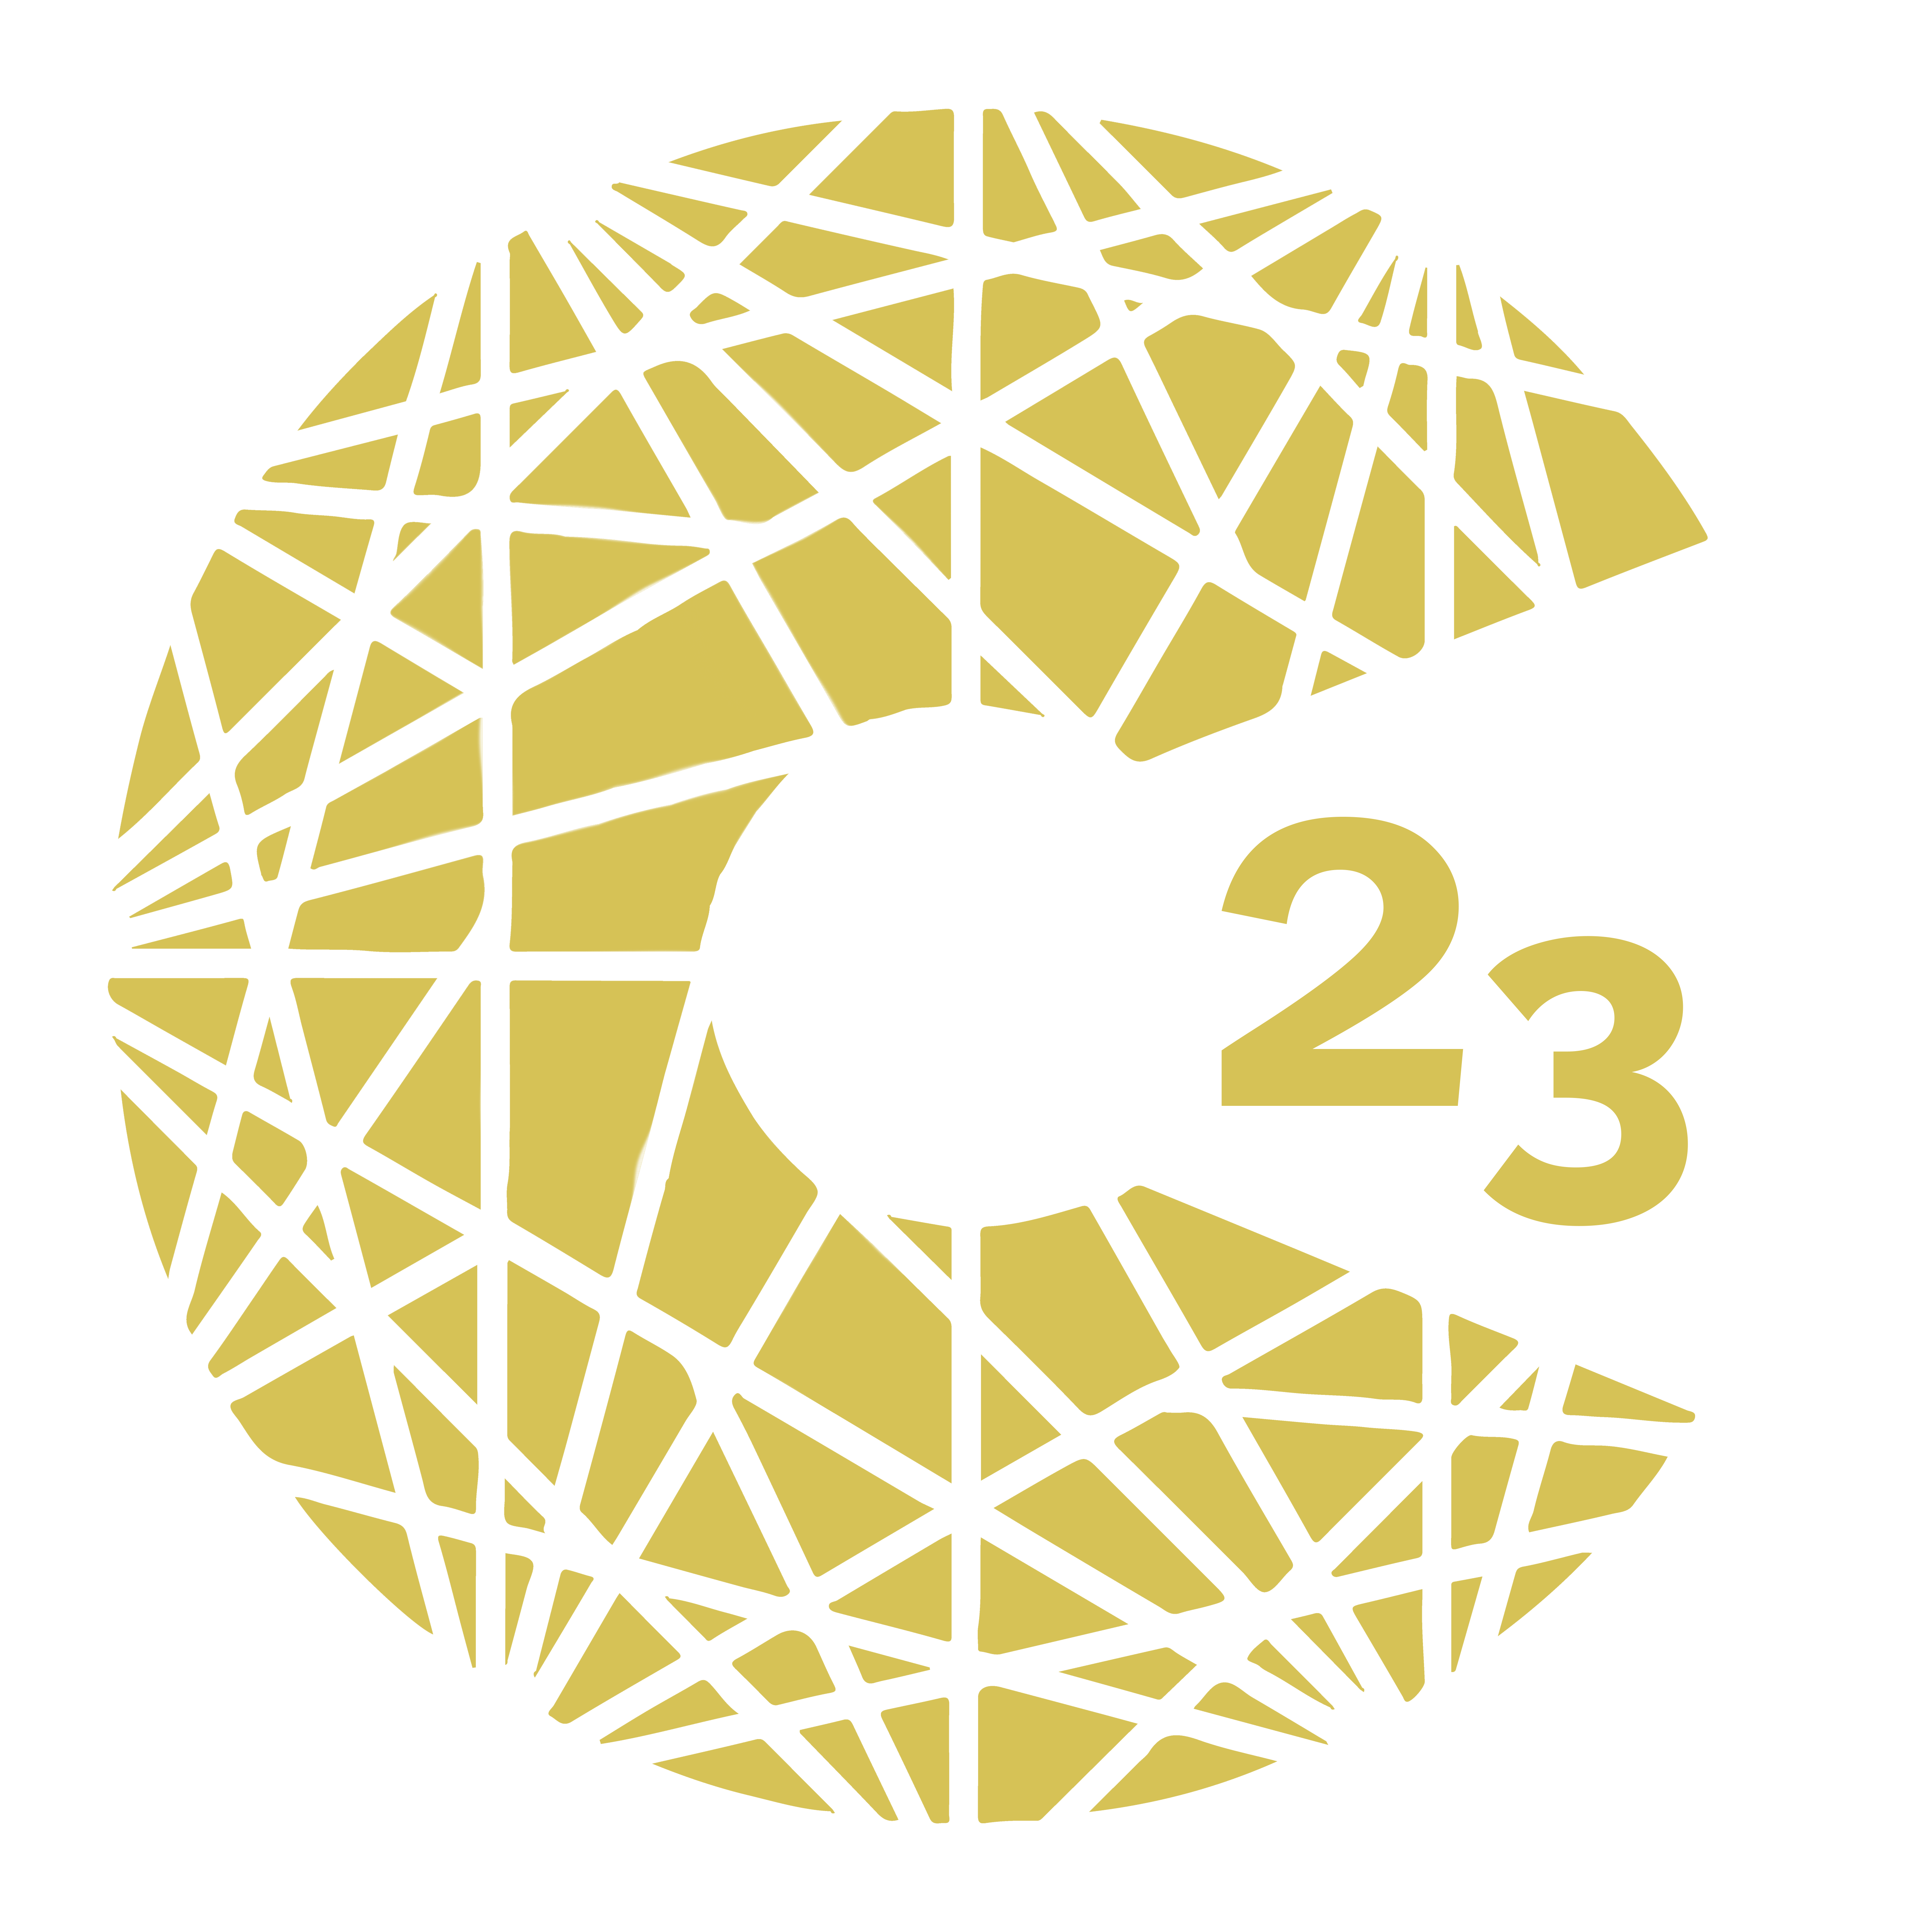 gold logo